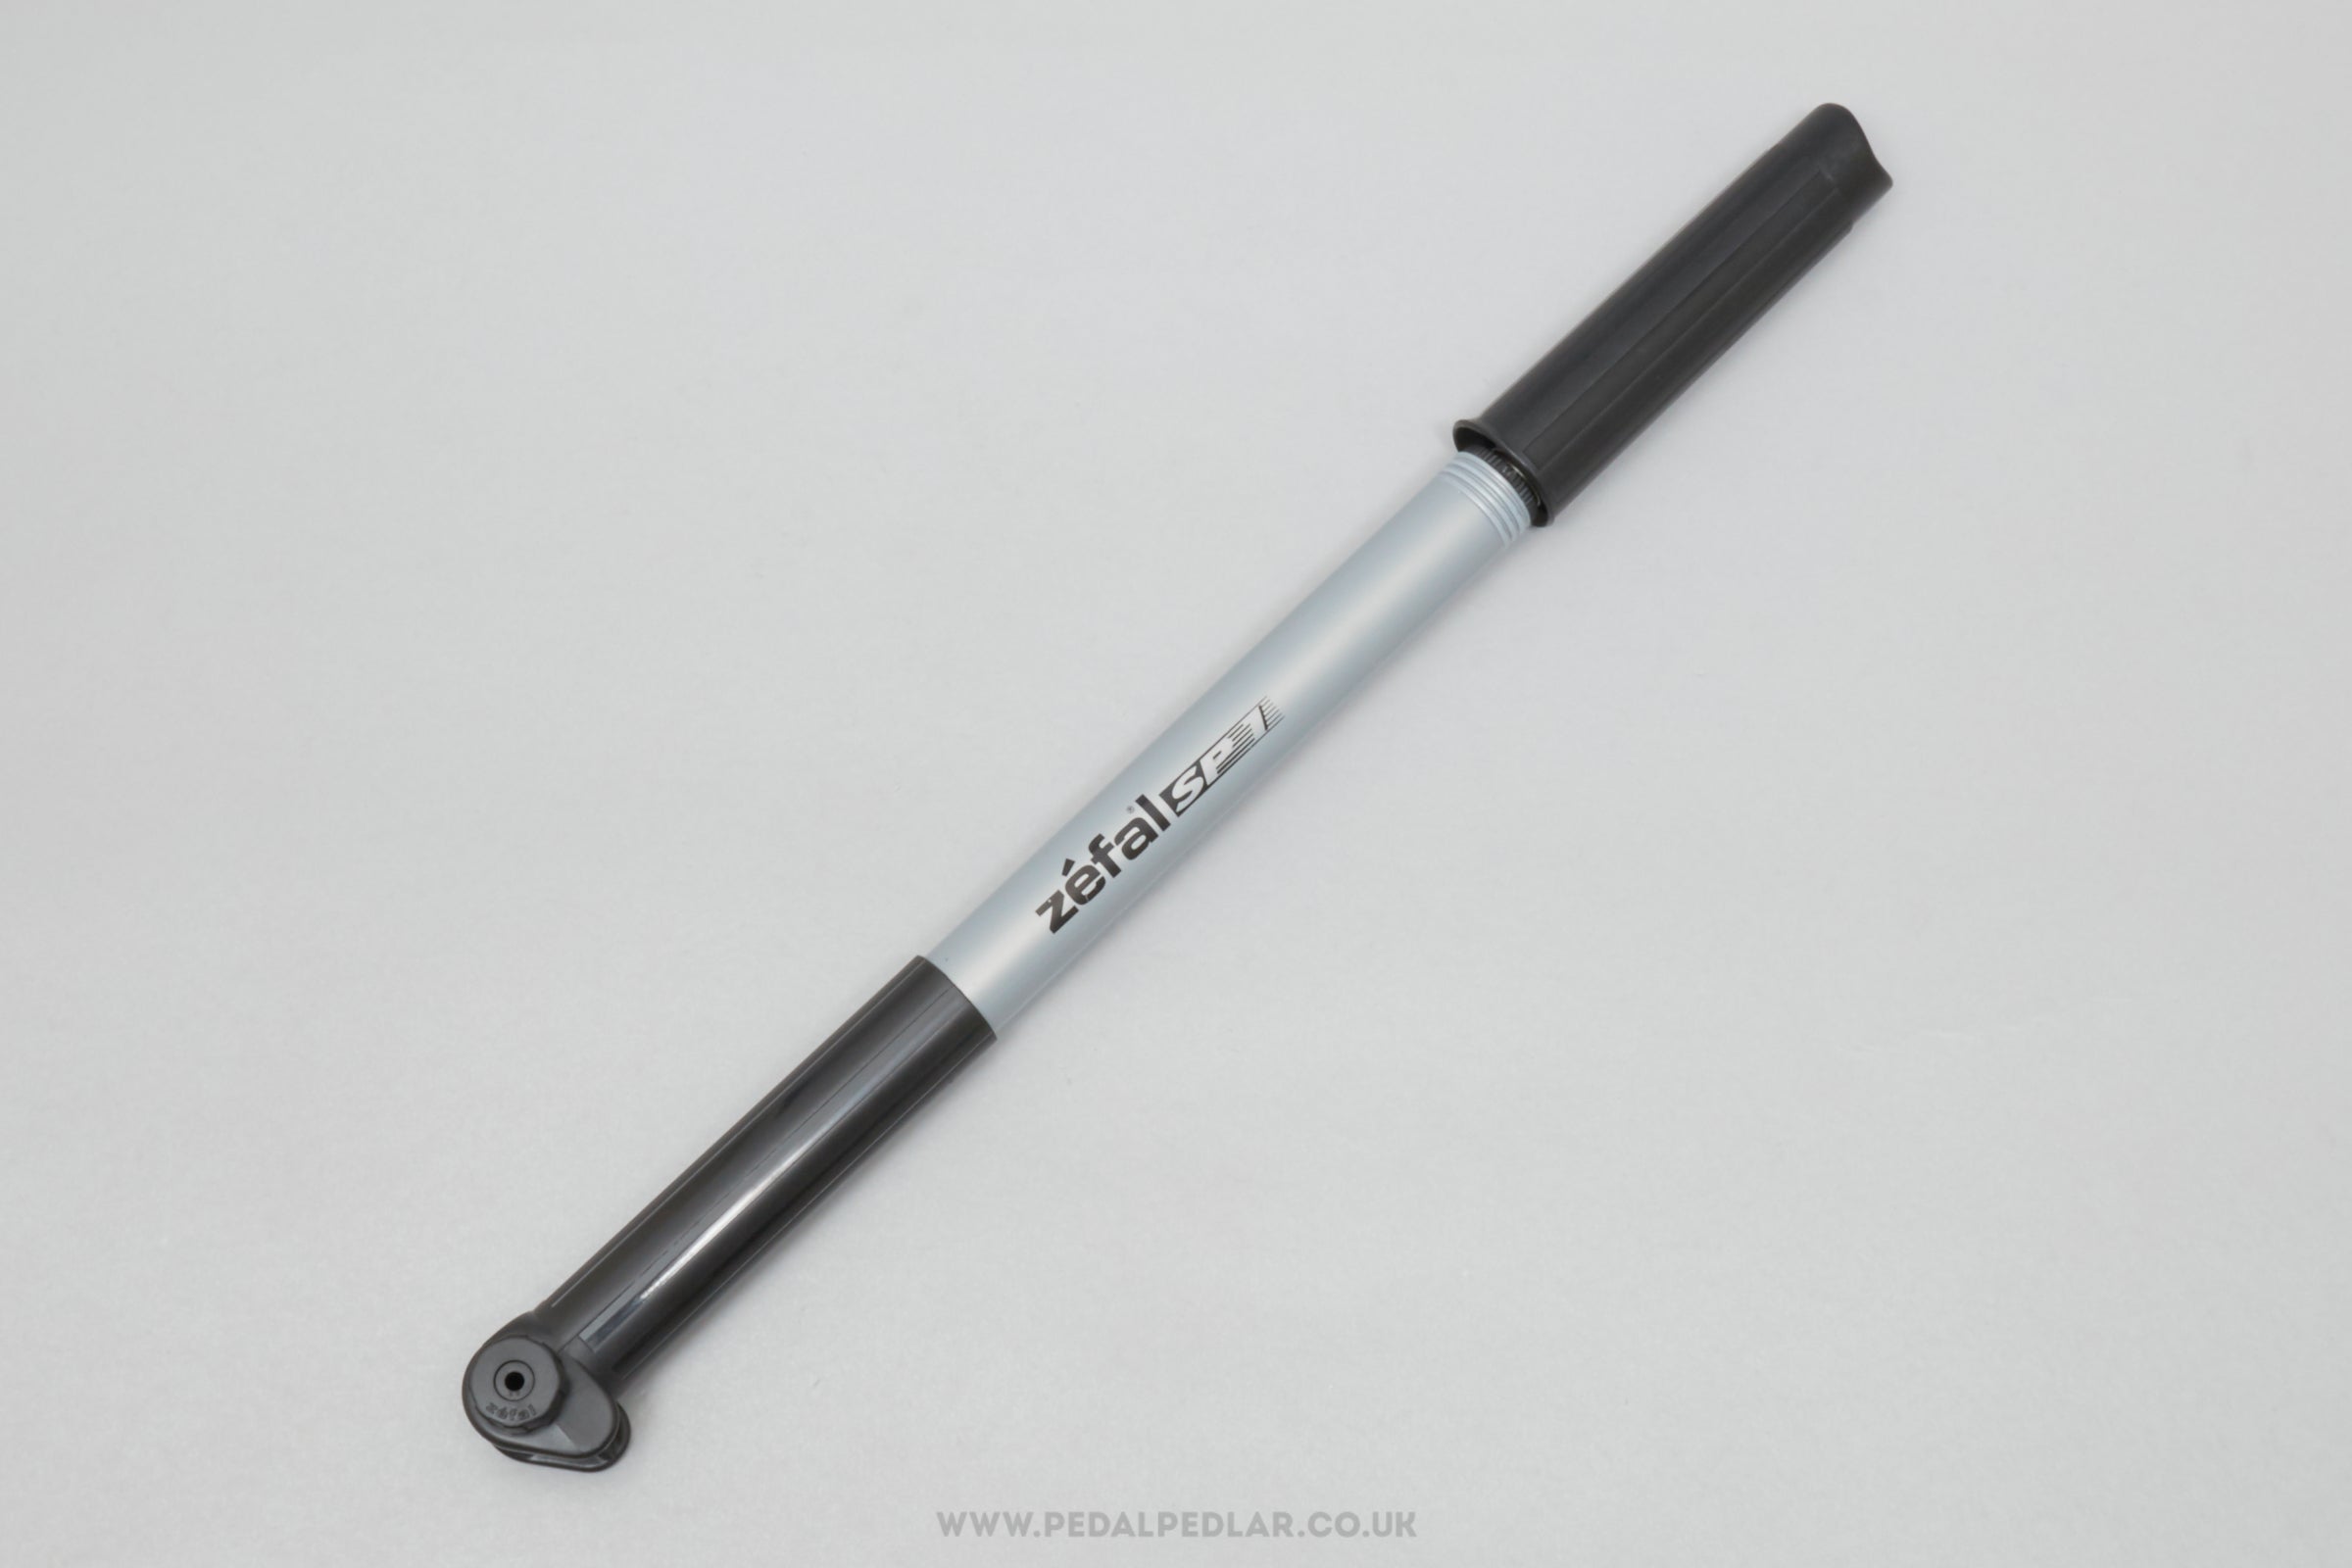 Zefal SP 1 NOS Vintage Grey 36 - 42 cm Frame Fit Bike Pump - Pedal Pedlar - Buy New Old Stock Cycle Accessories